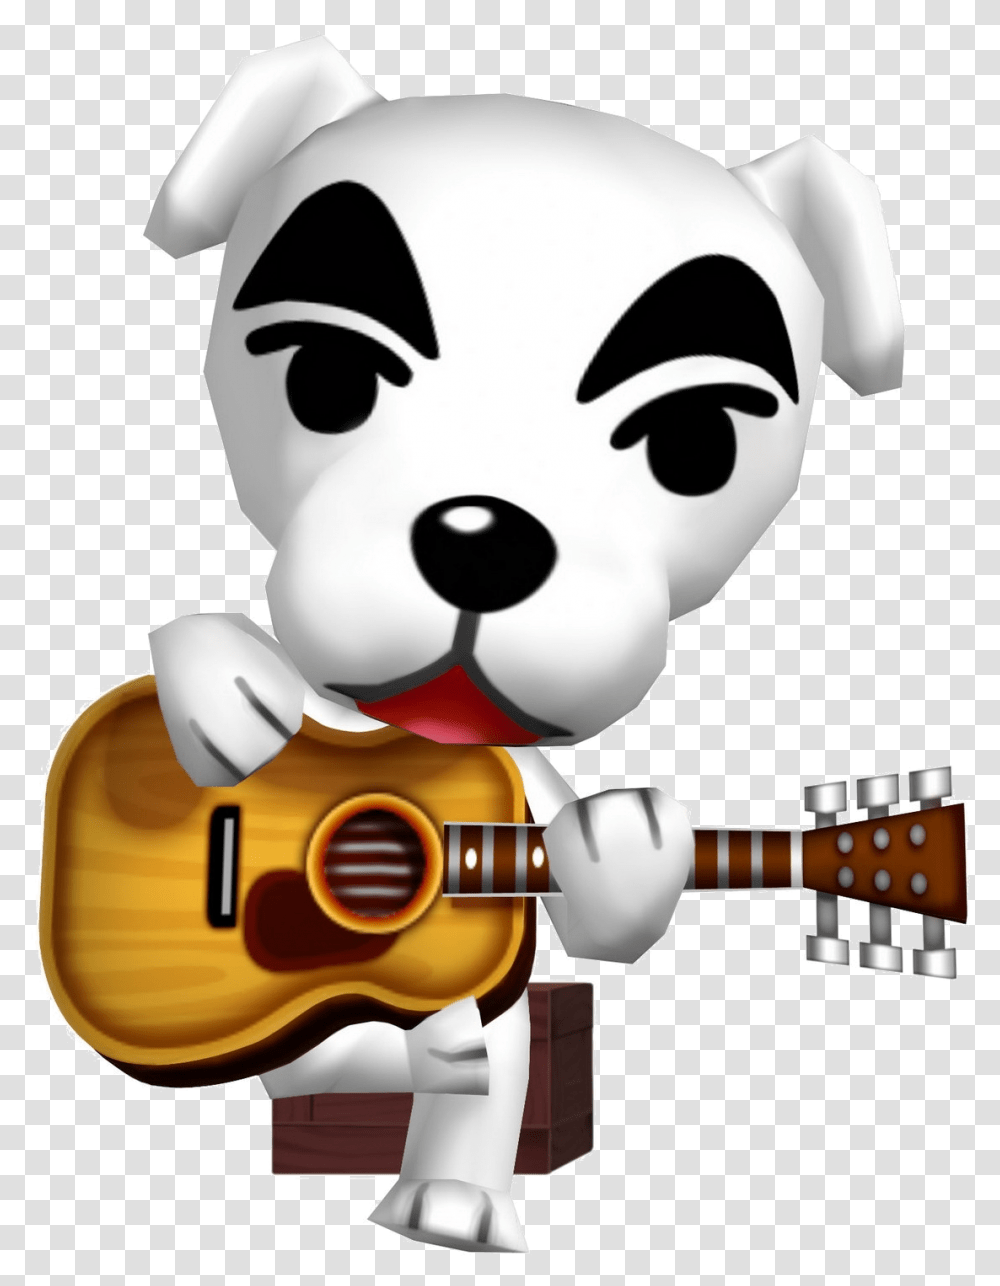 Animal Crossing Kk Slider Animal Crossing, Toy, Guitar, Leisure Activities, Musical Instrument Transparent Png